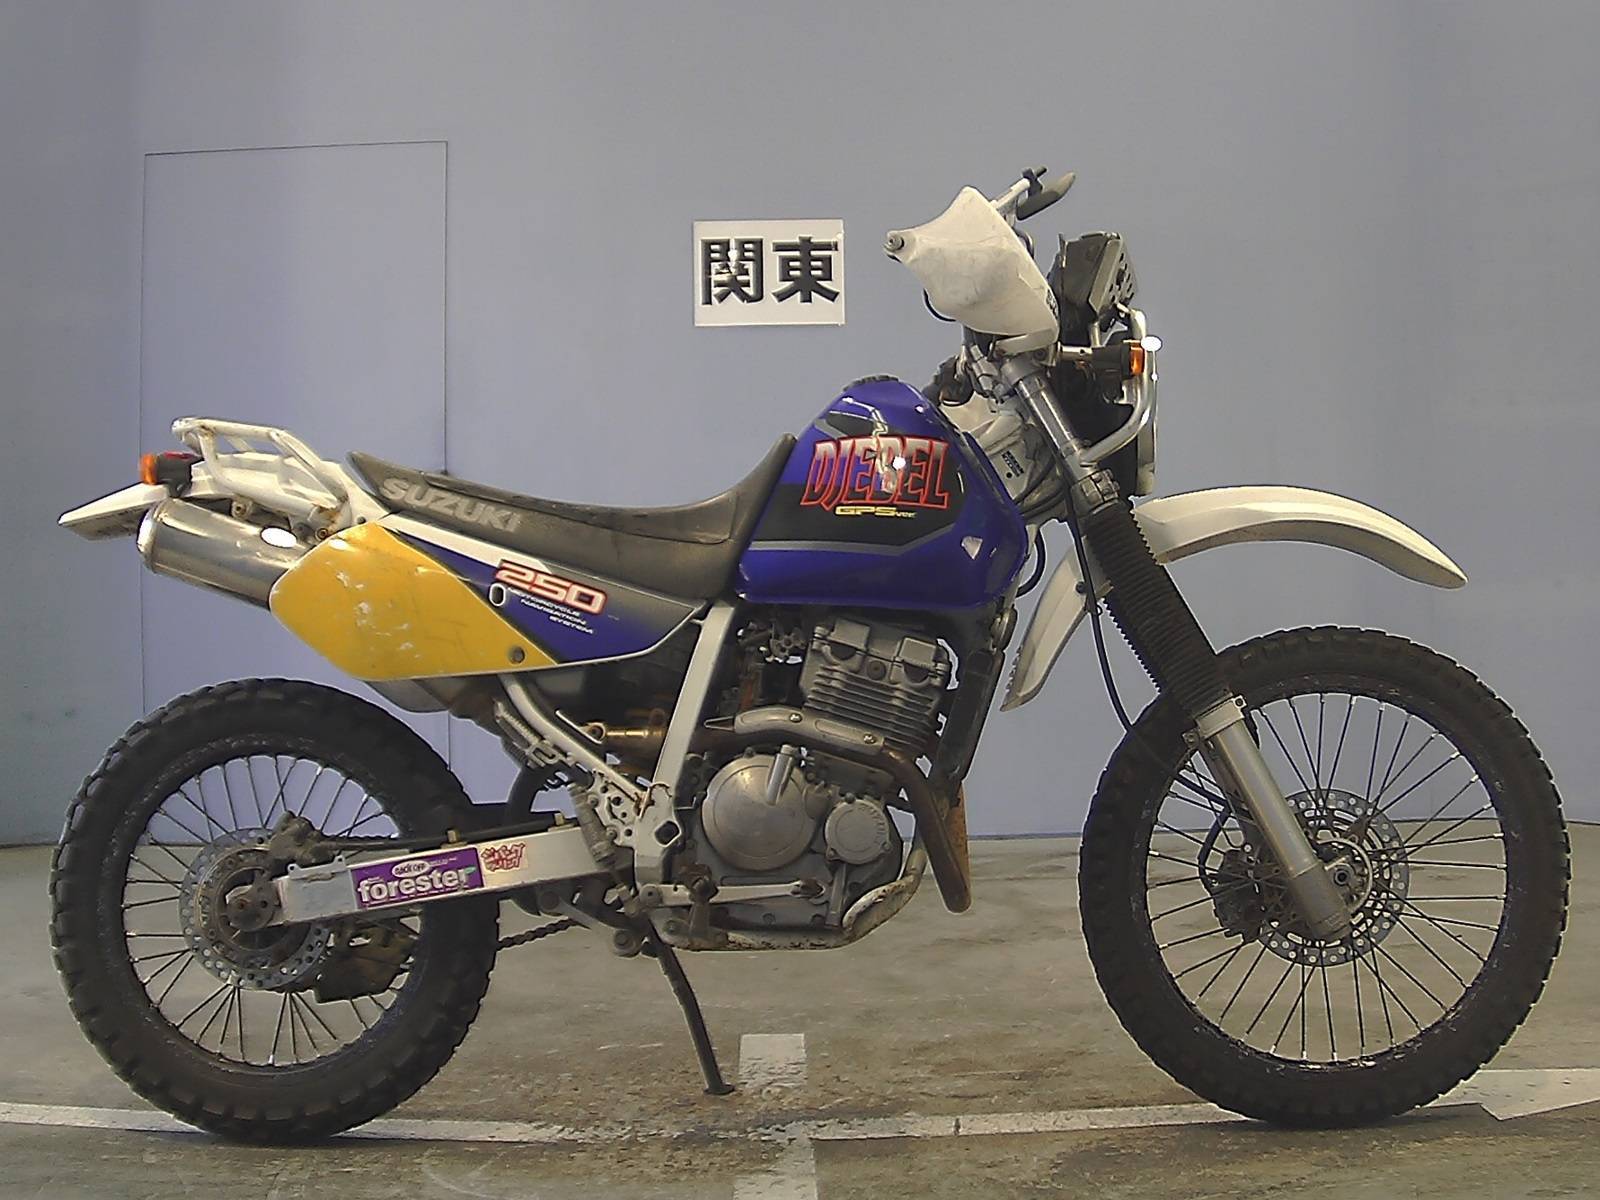 Обзор мотоцикла suzuki djebel 200 (dr 200 se)